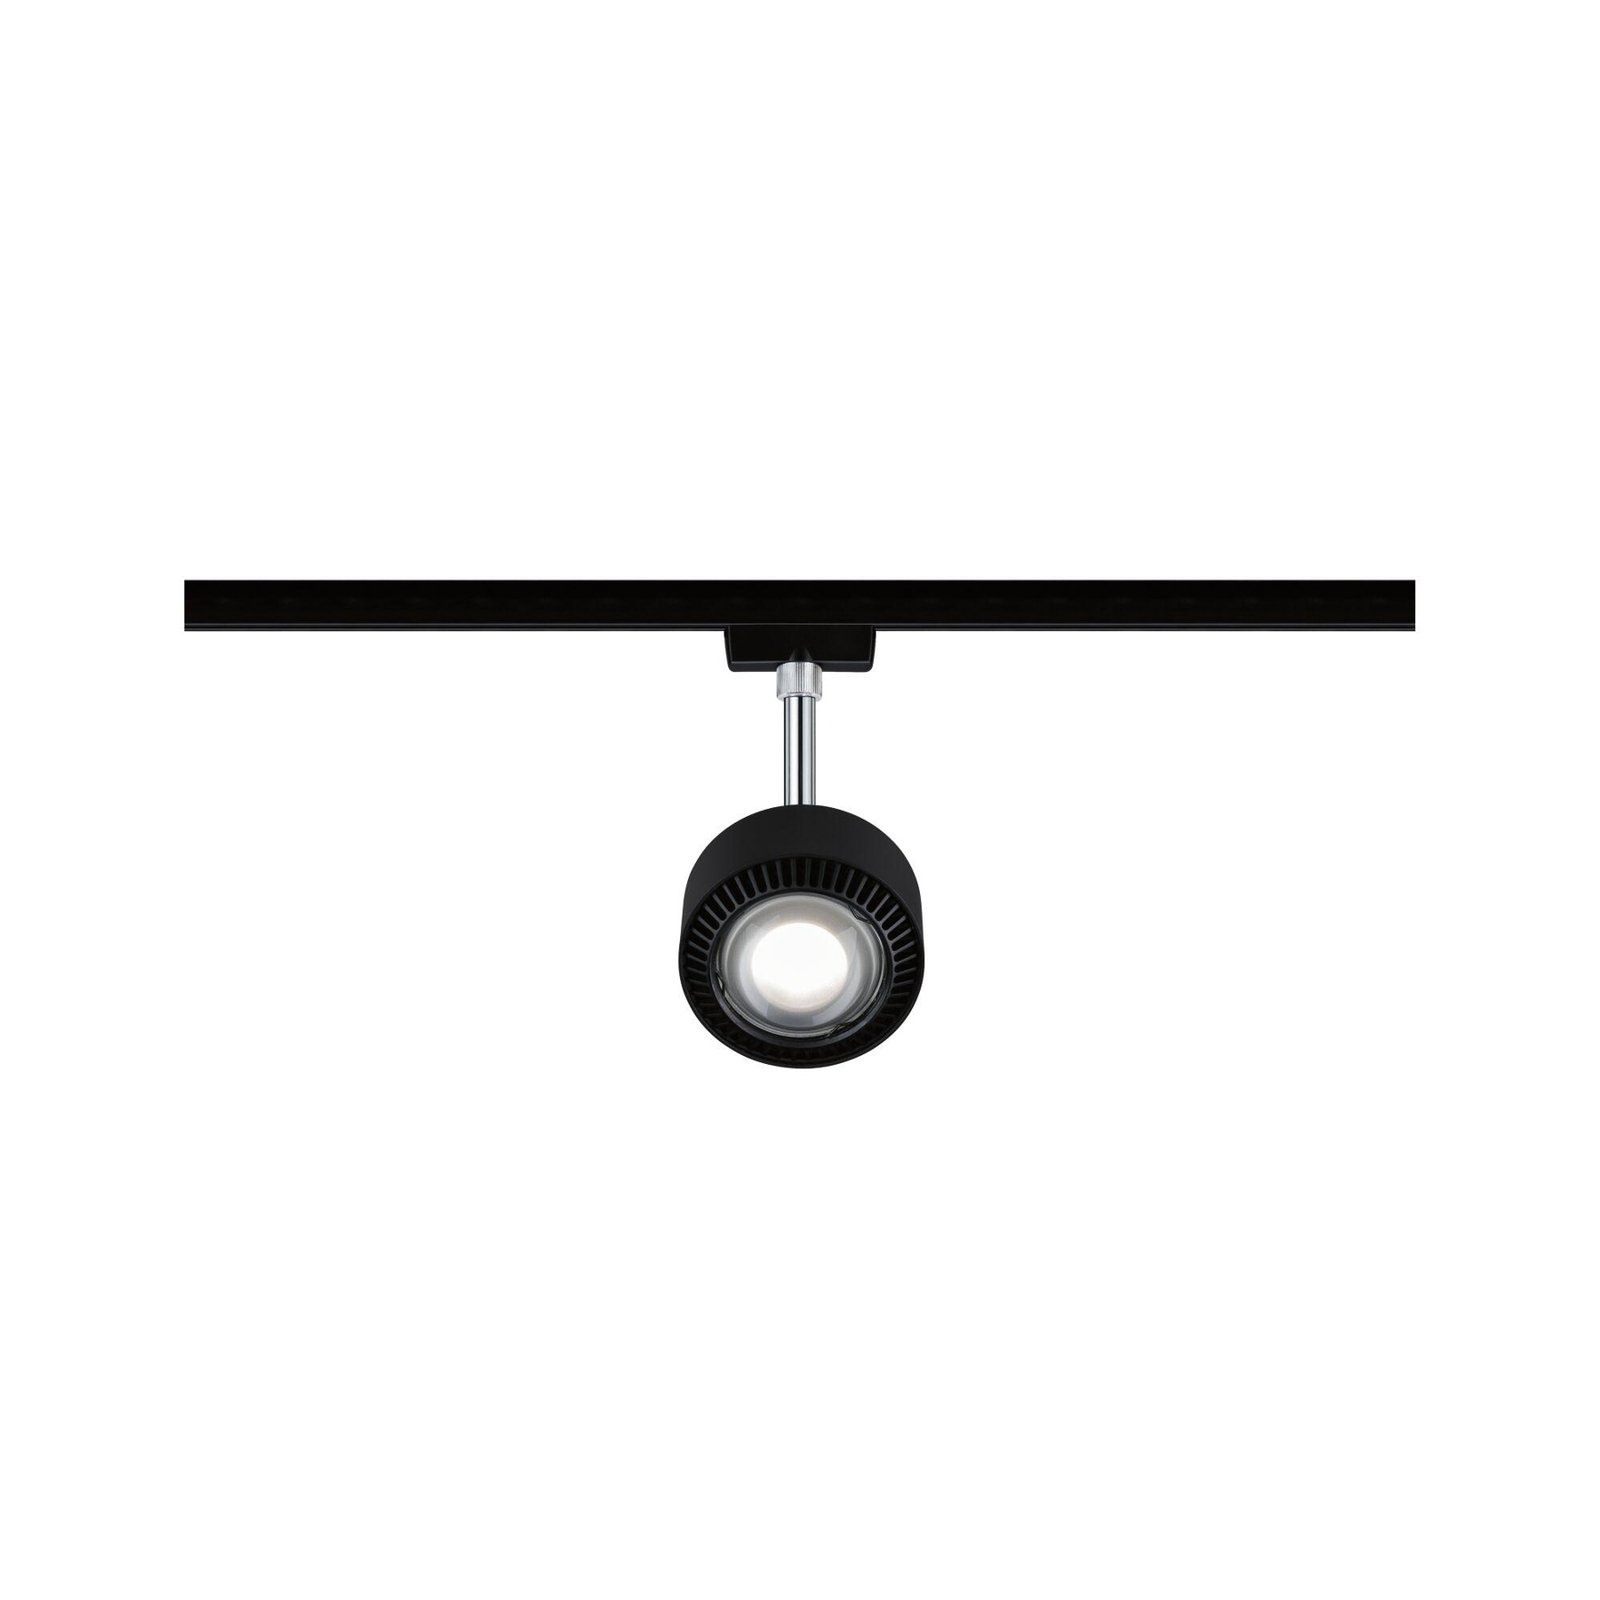 Paulmann URail Aldan LED spot, black matt, metal, CCT